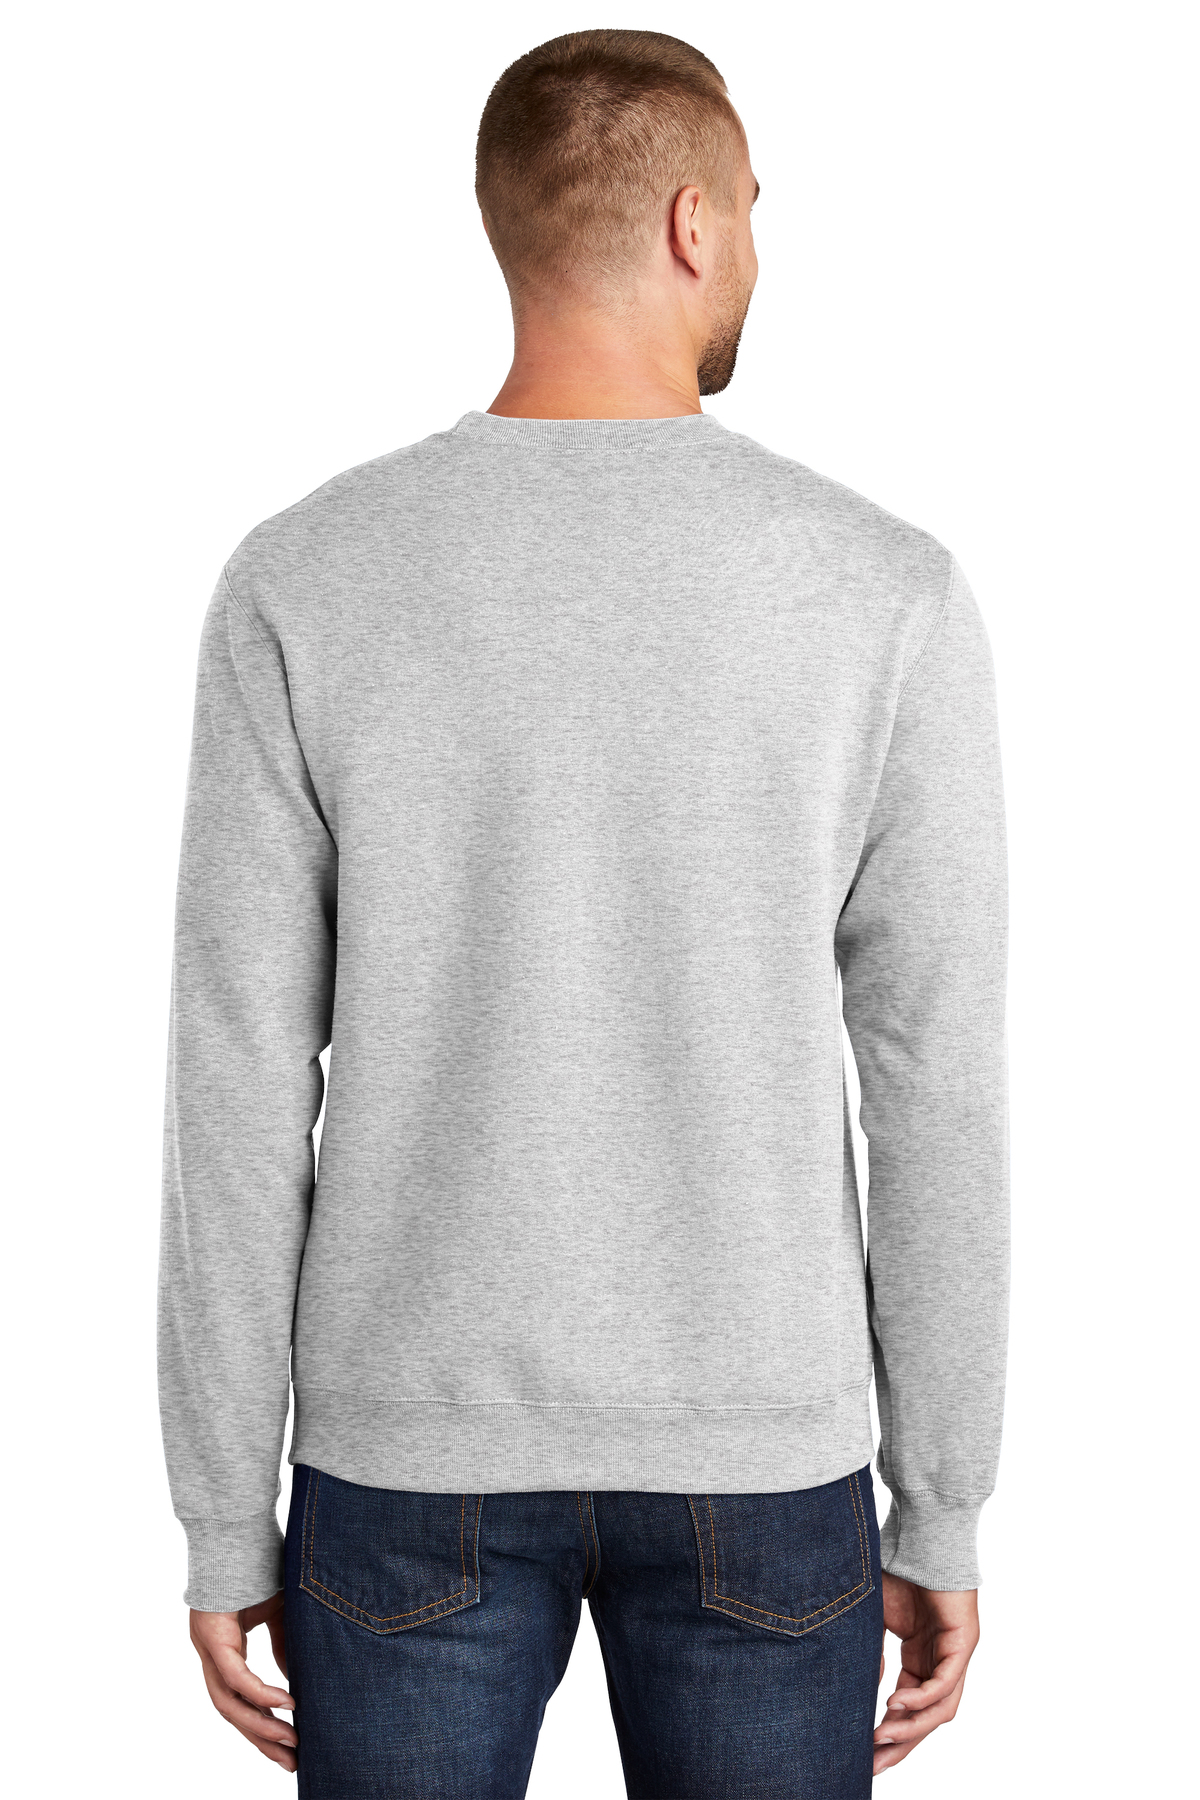 Port & Company Essential Fleece Crewneck Sweatshirt | Product | Port ...